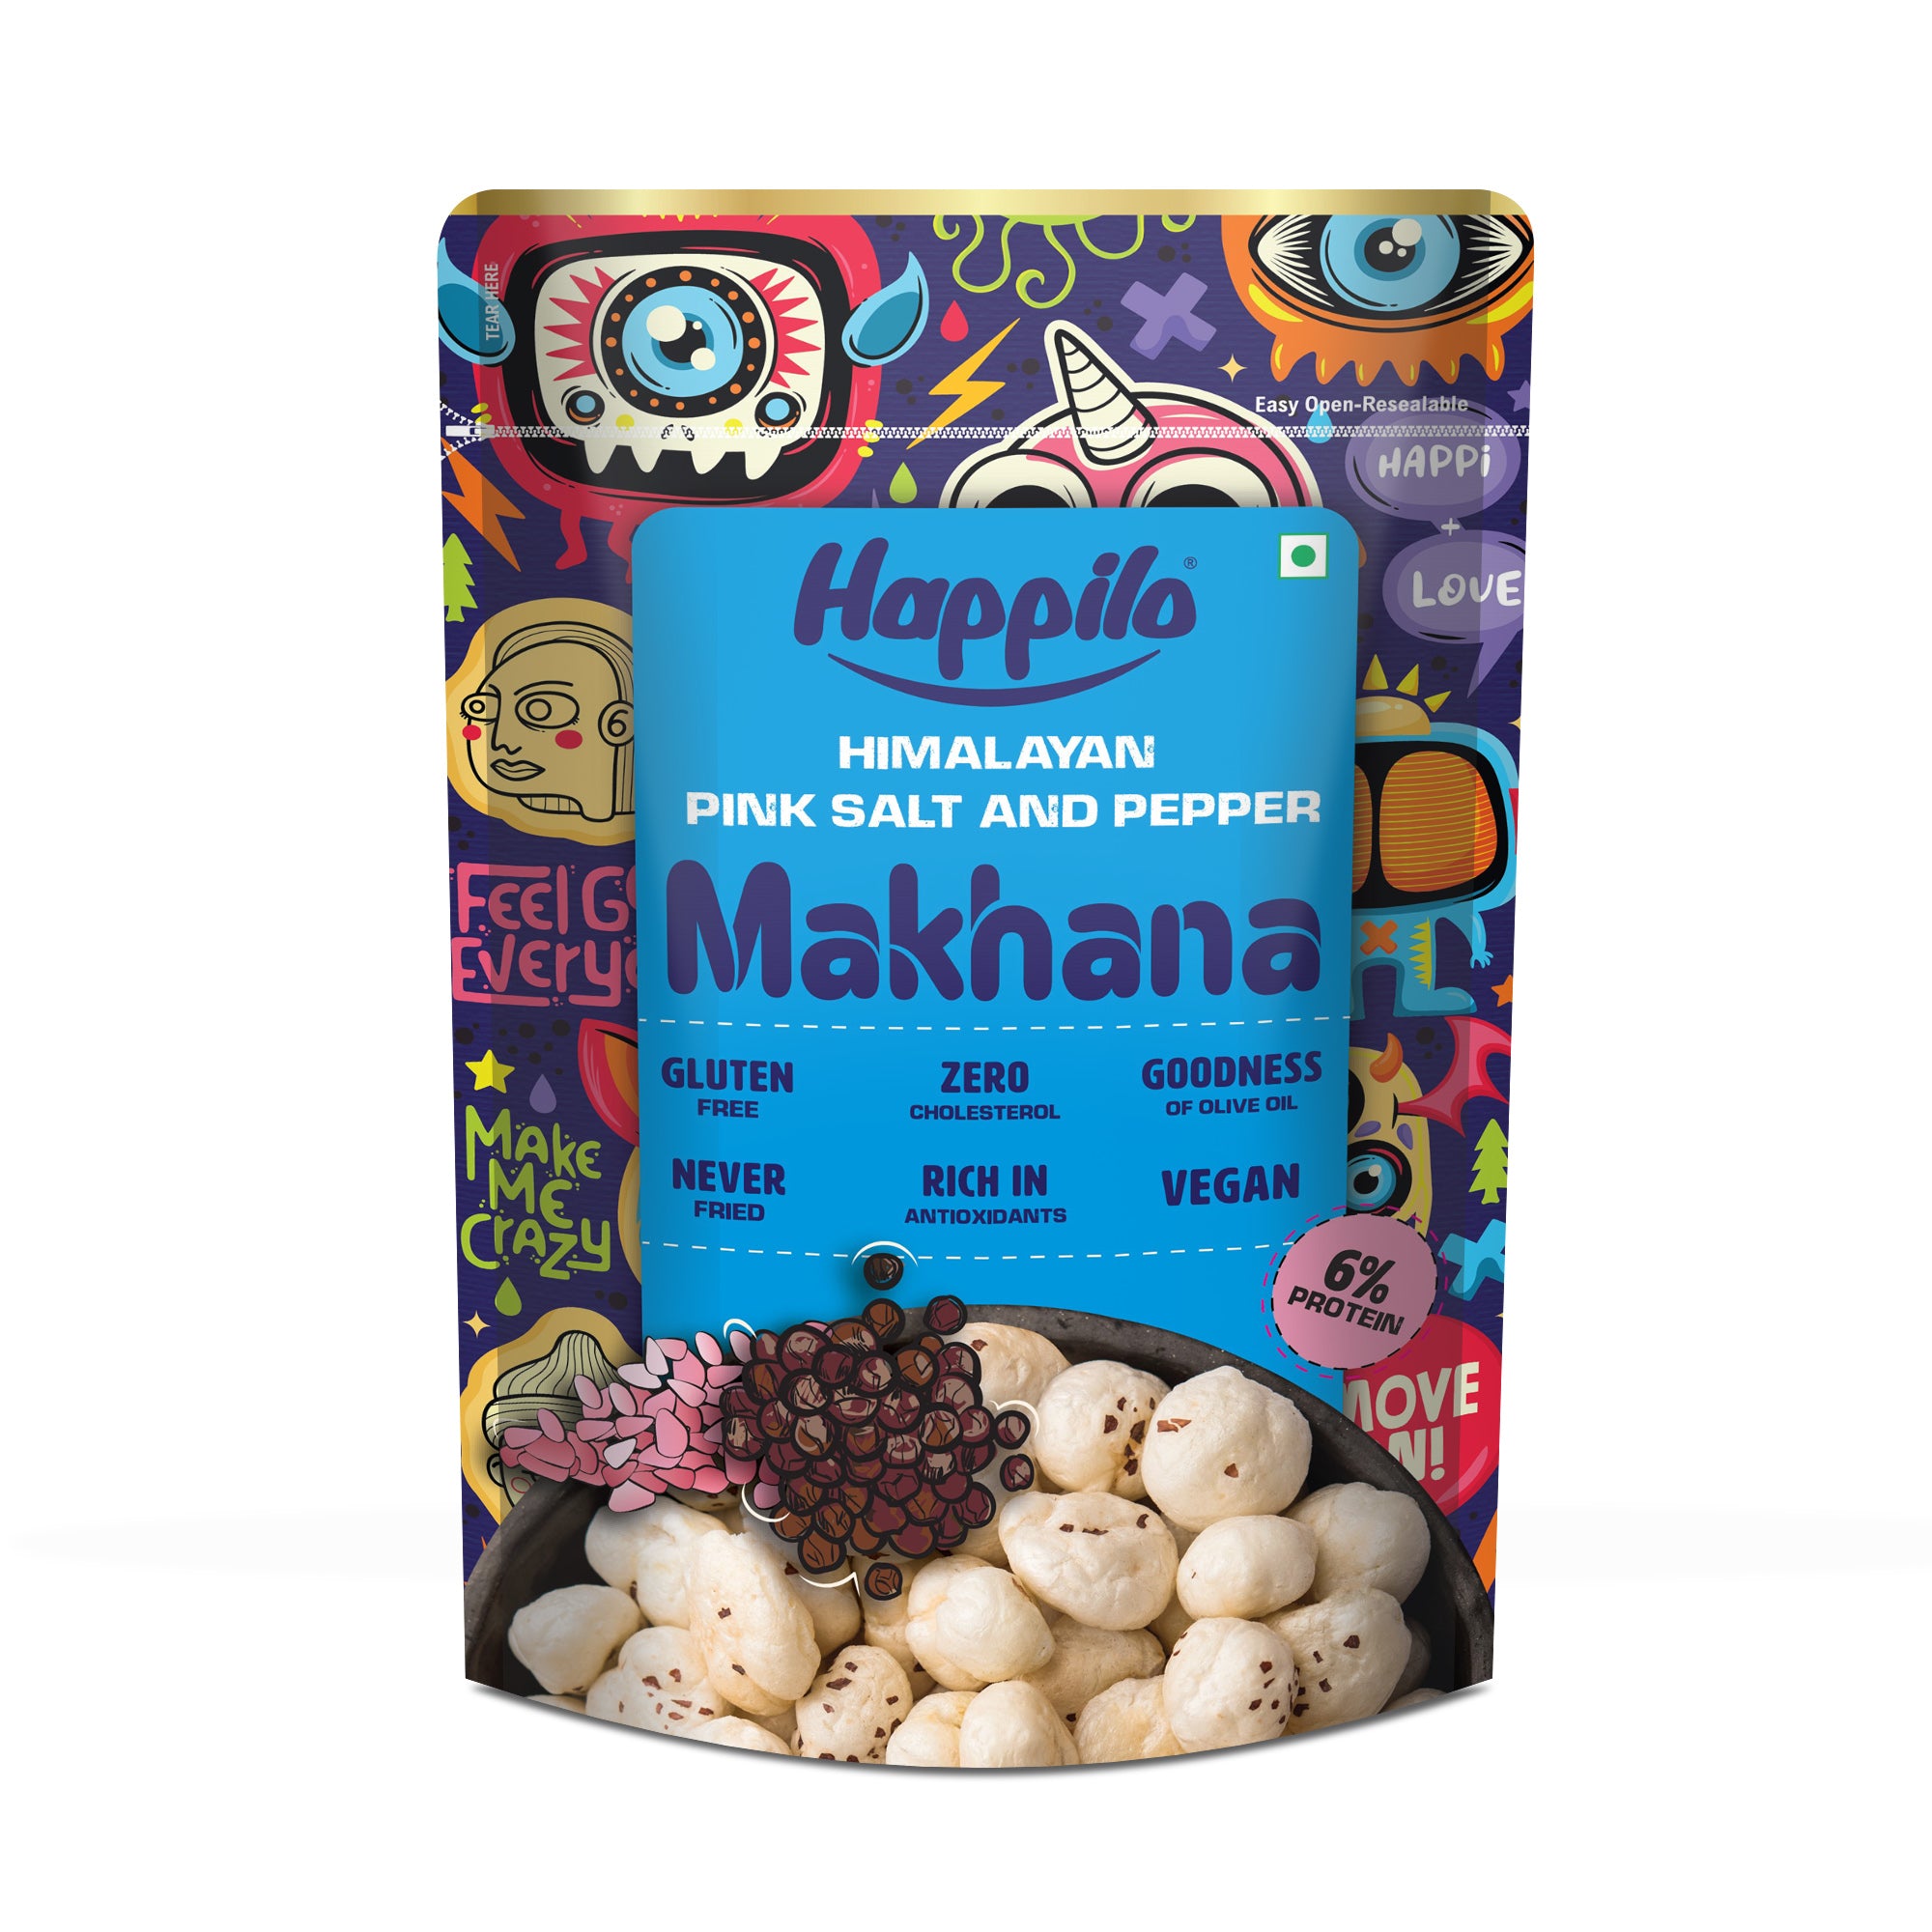 Happilo Premium Super Snack Makhana Himalayan Salt & Pepper 60g, Roasted Foxnut Healthy Snack Low Calorie Gluten Free and Vegan